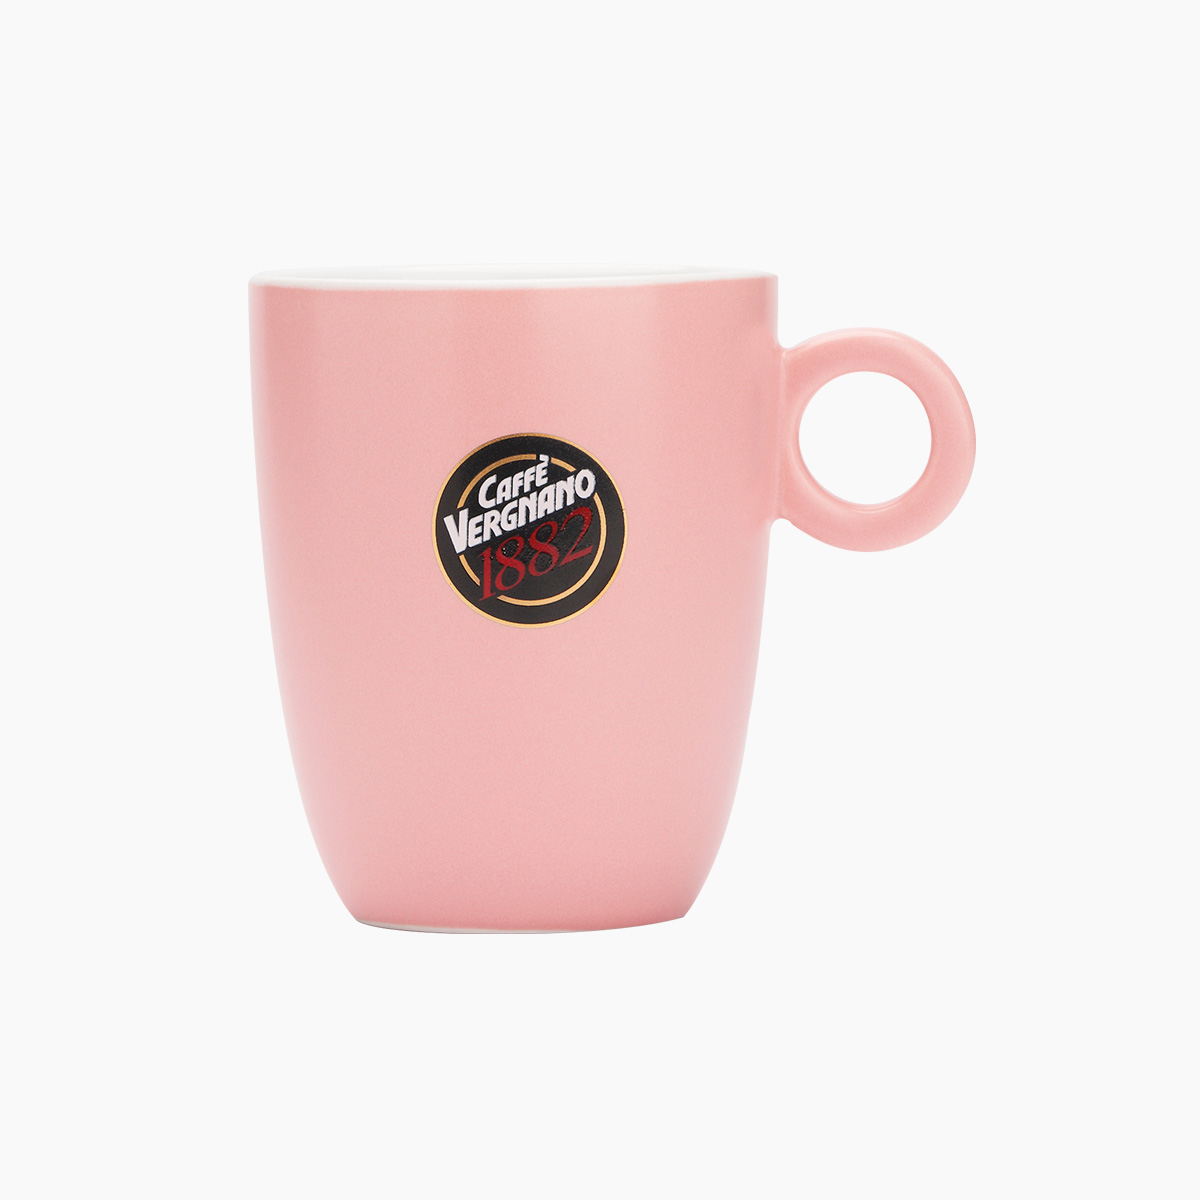 Claro Pink Footed Coffee Mug, Set of 4 – Godinger